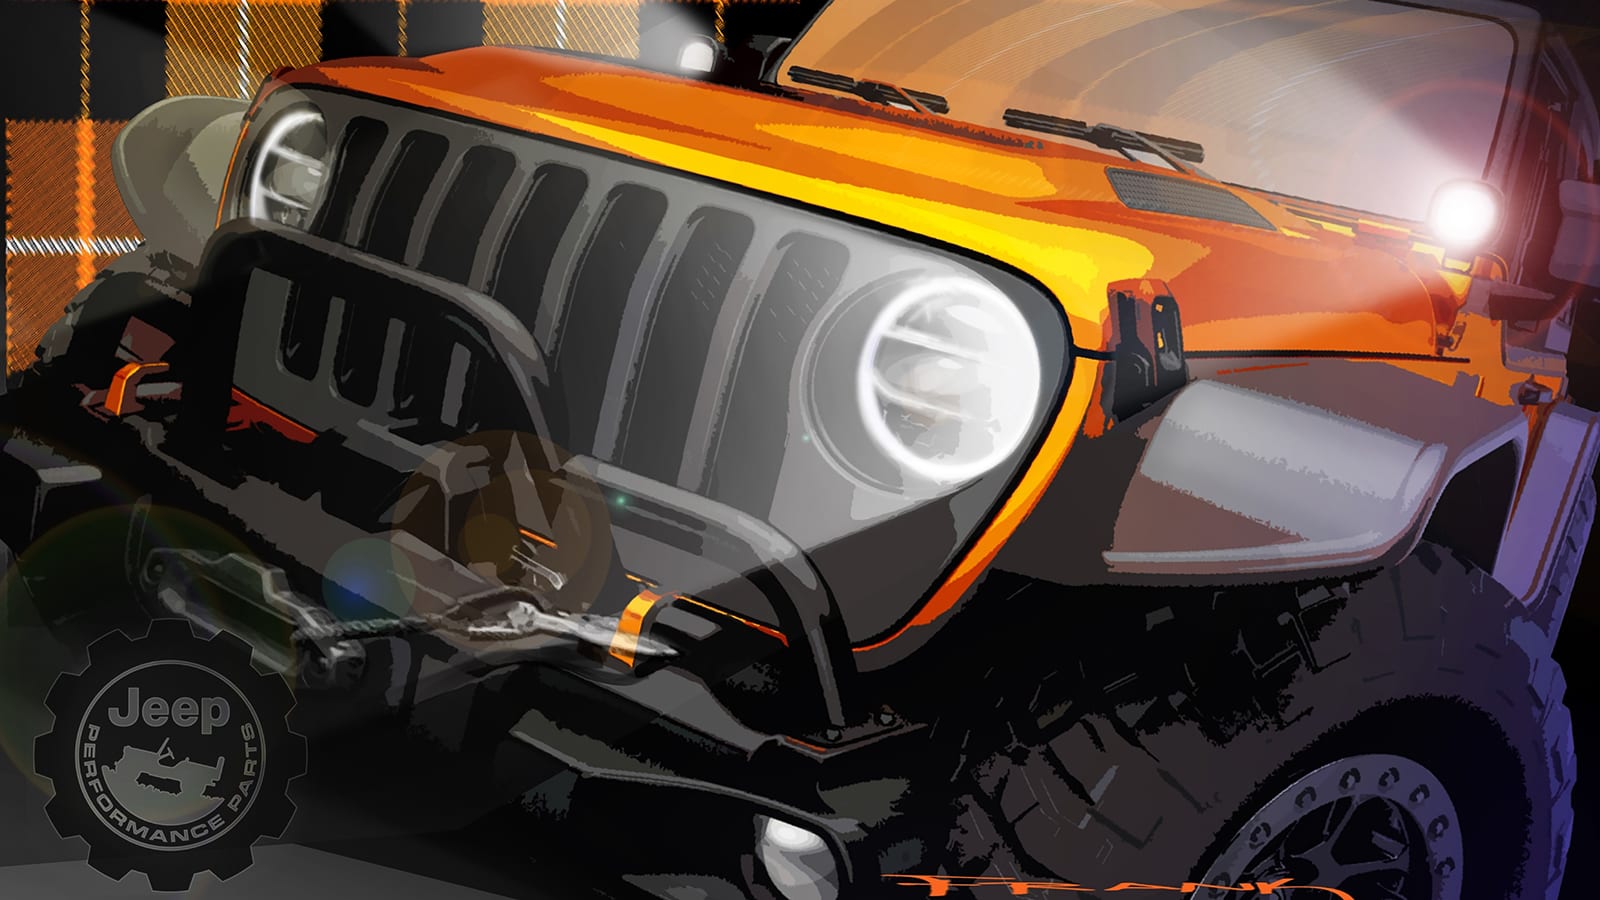 Easter Jeep Safari concept rendering